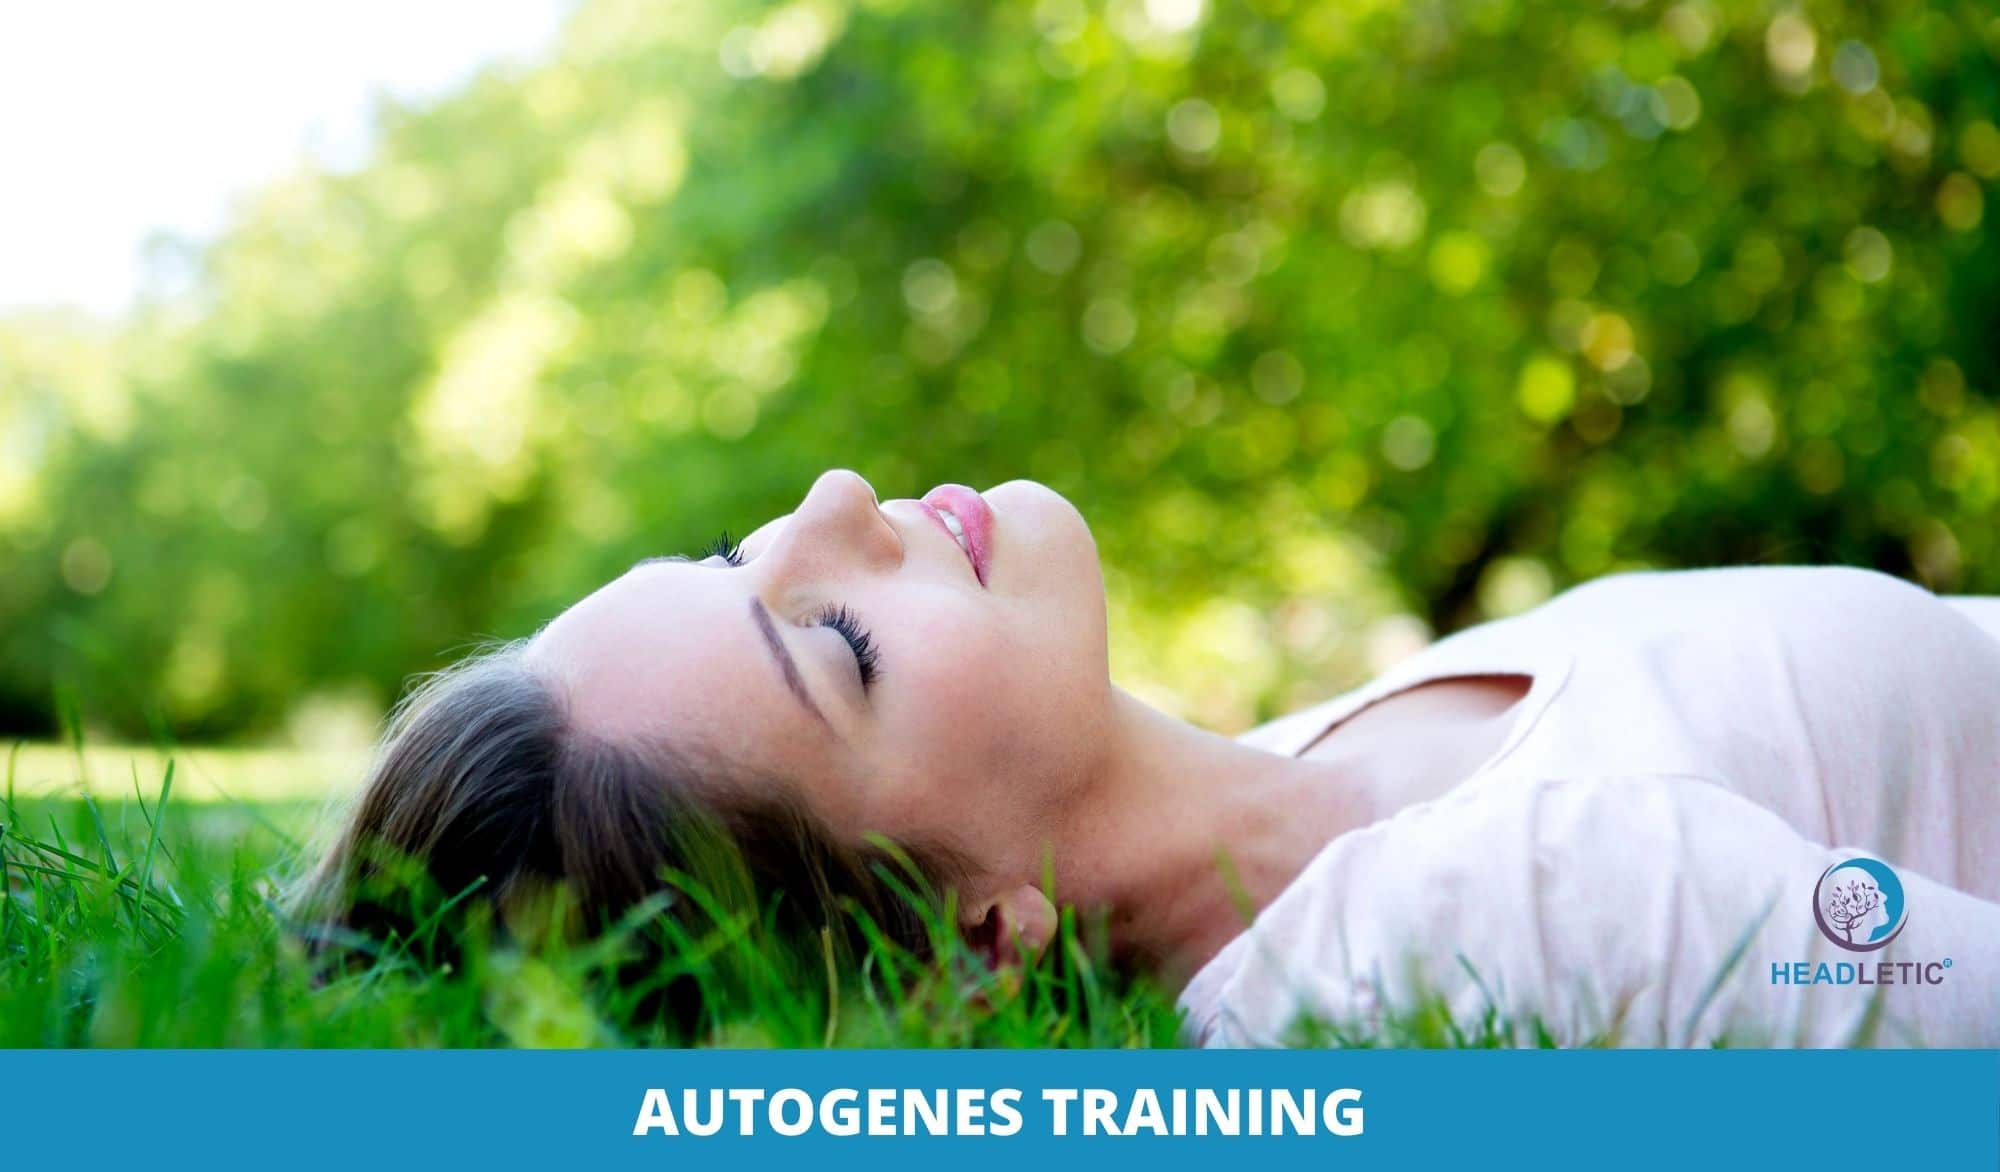 autogenes training der komplette leitfaden – funktionsweise + 7 Übungen